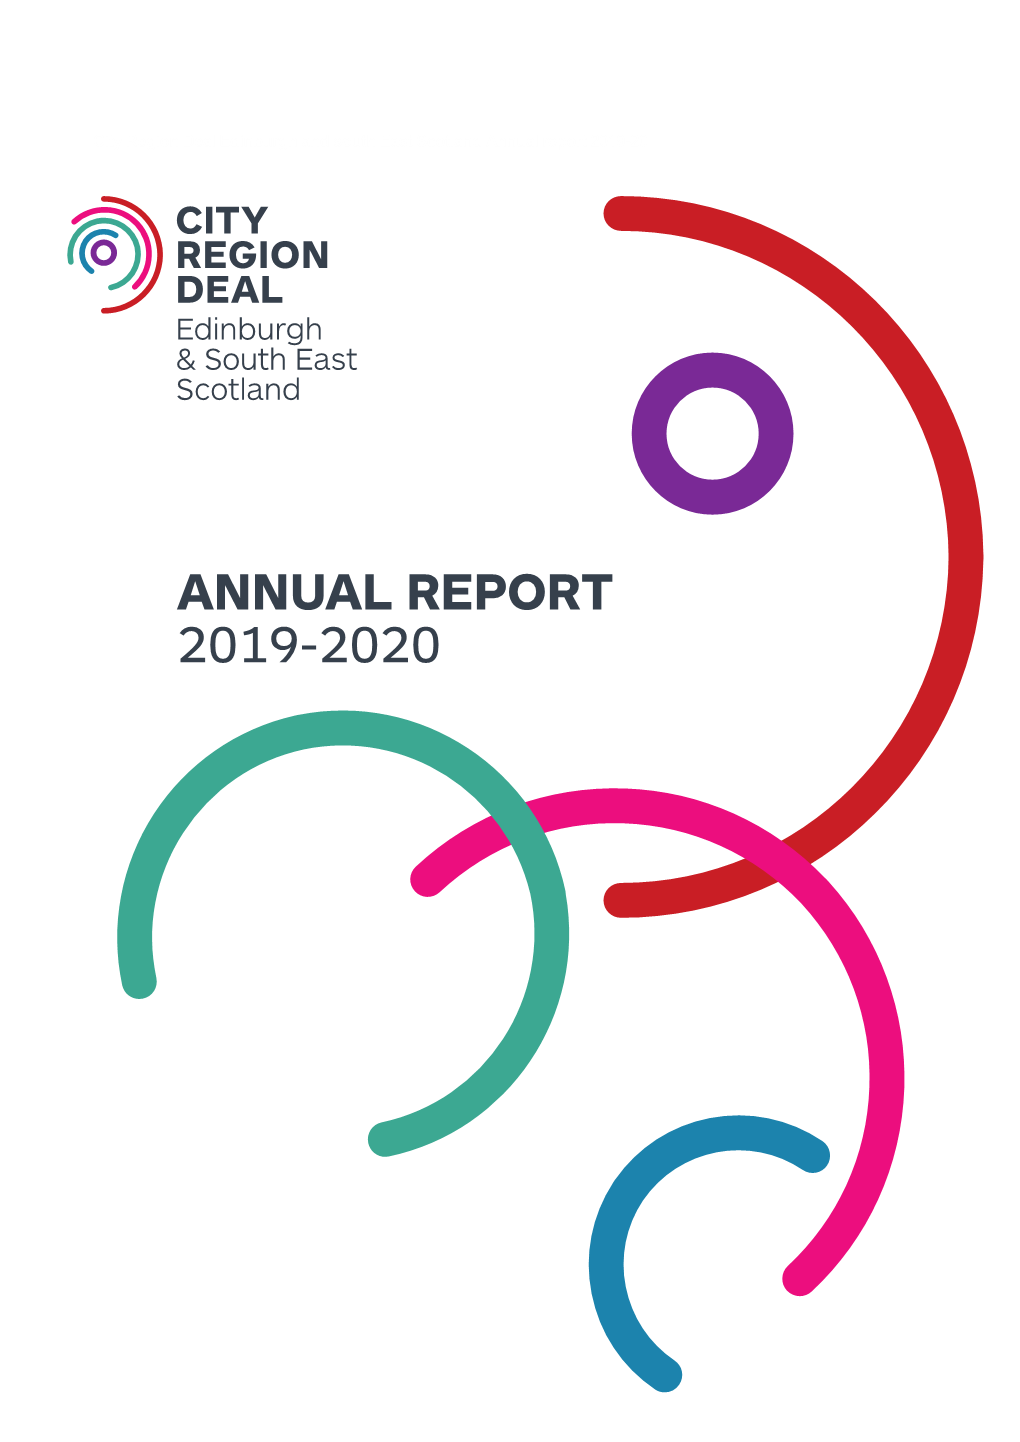 City Region Deal Annual Report 2019/20